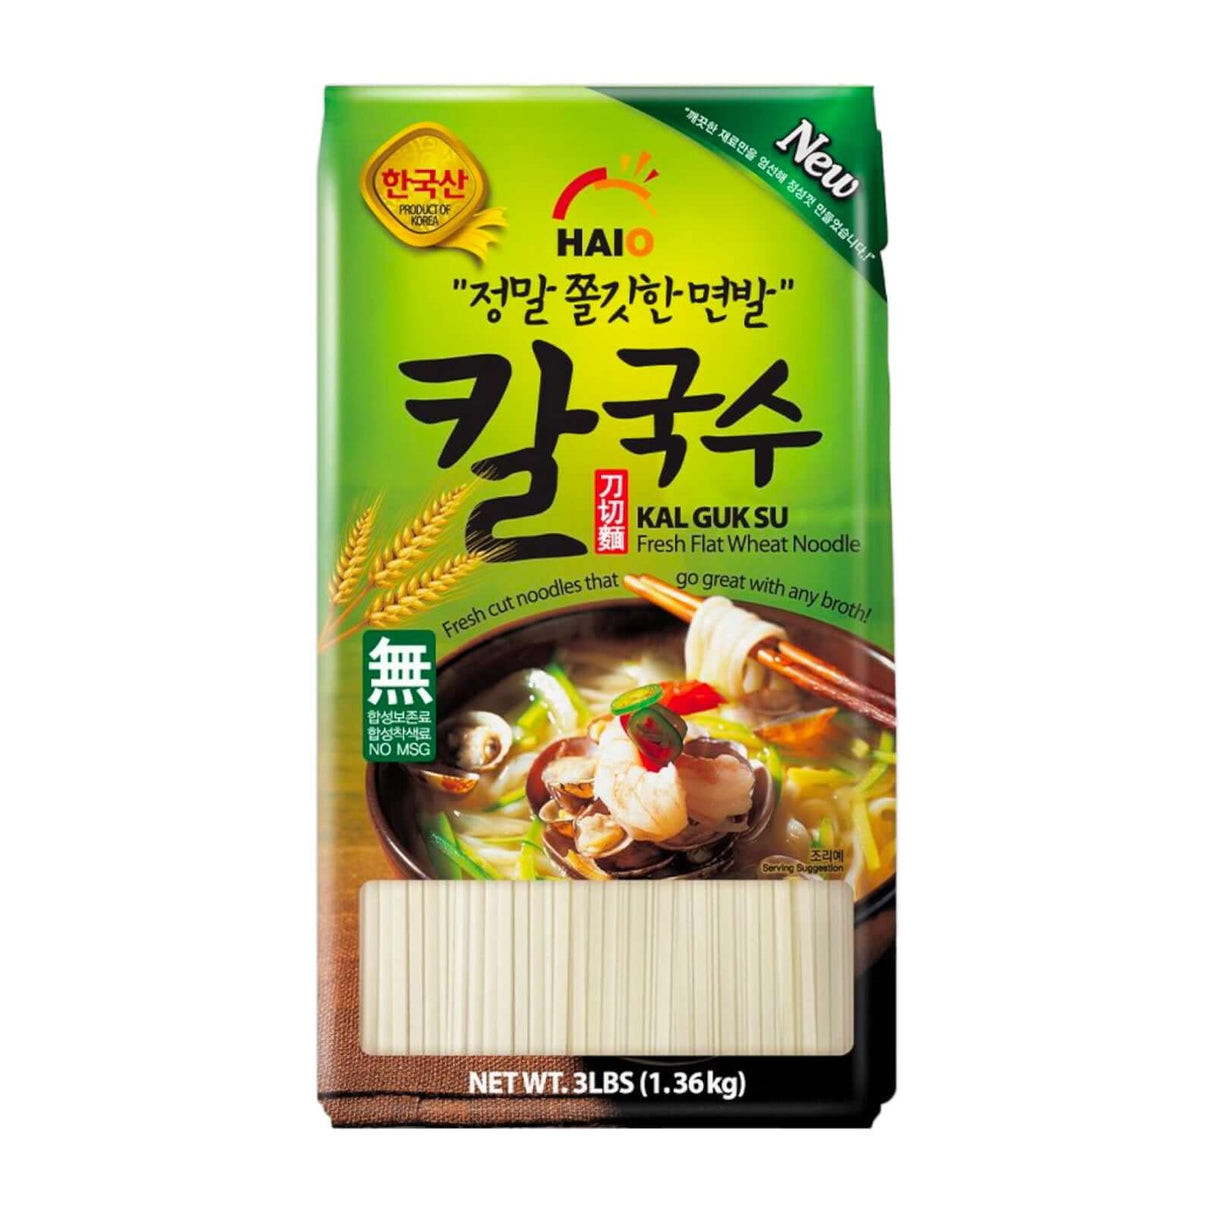 Haio Kal Guk Su Fresh Flat Wheat Noodle